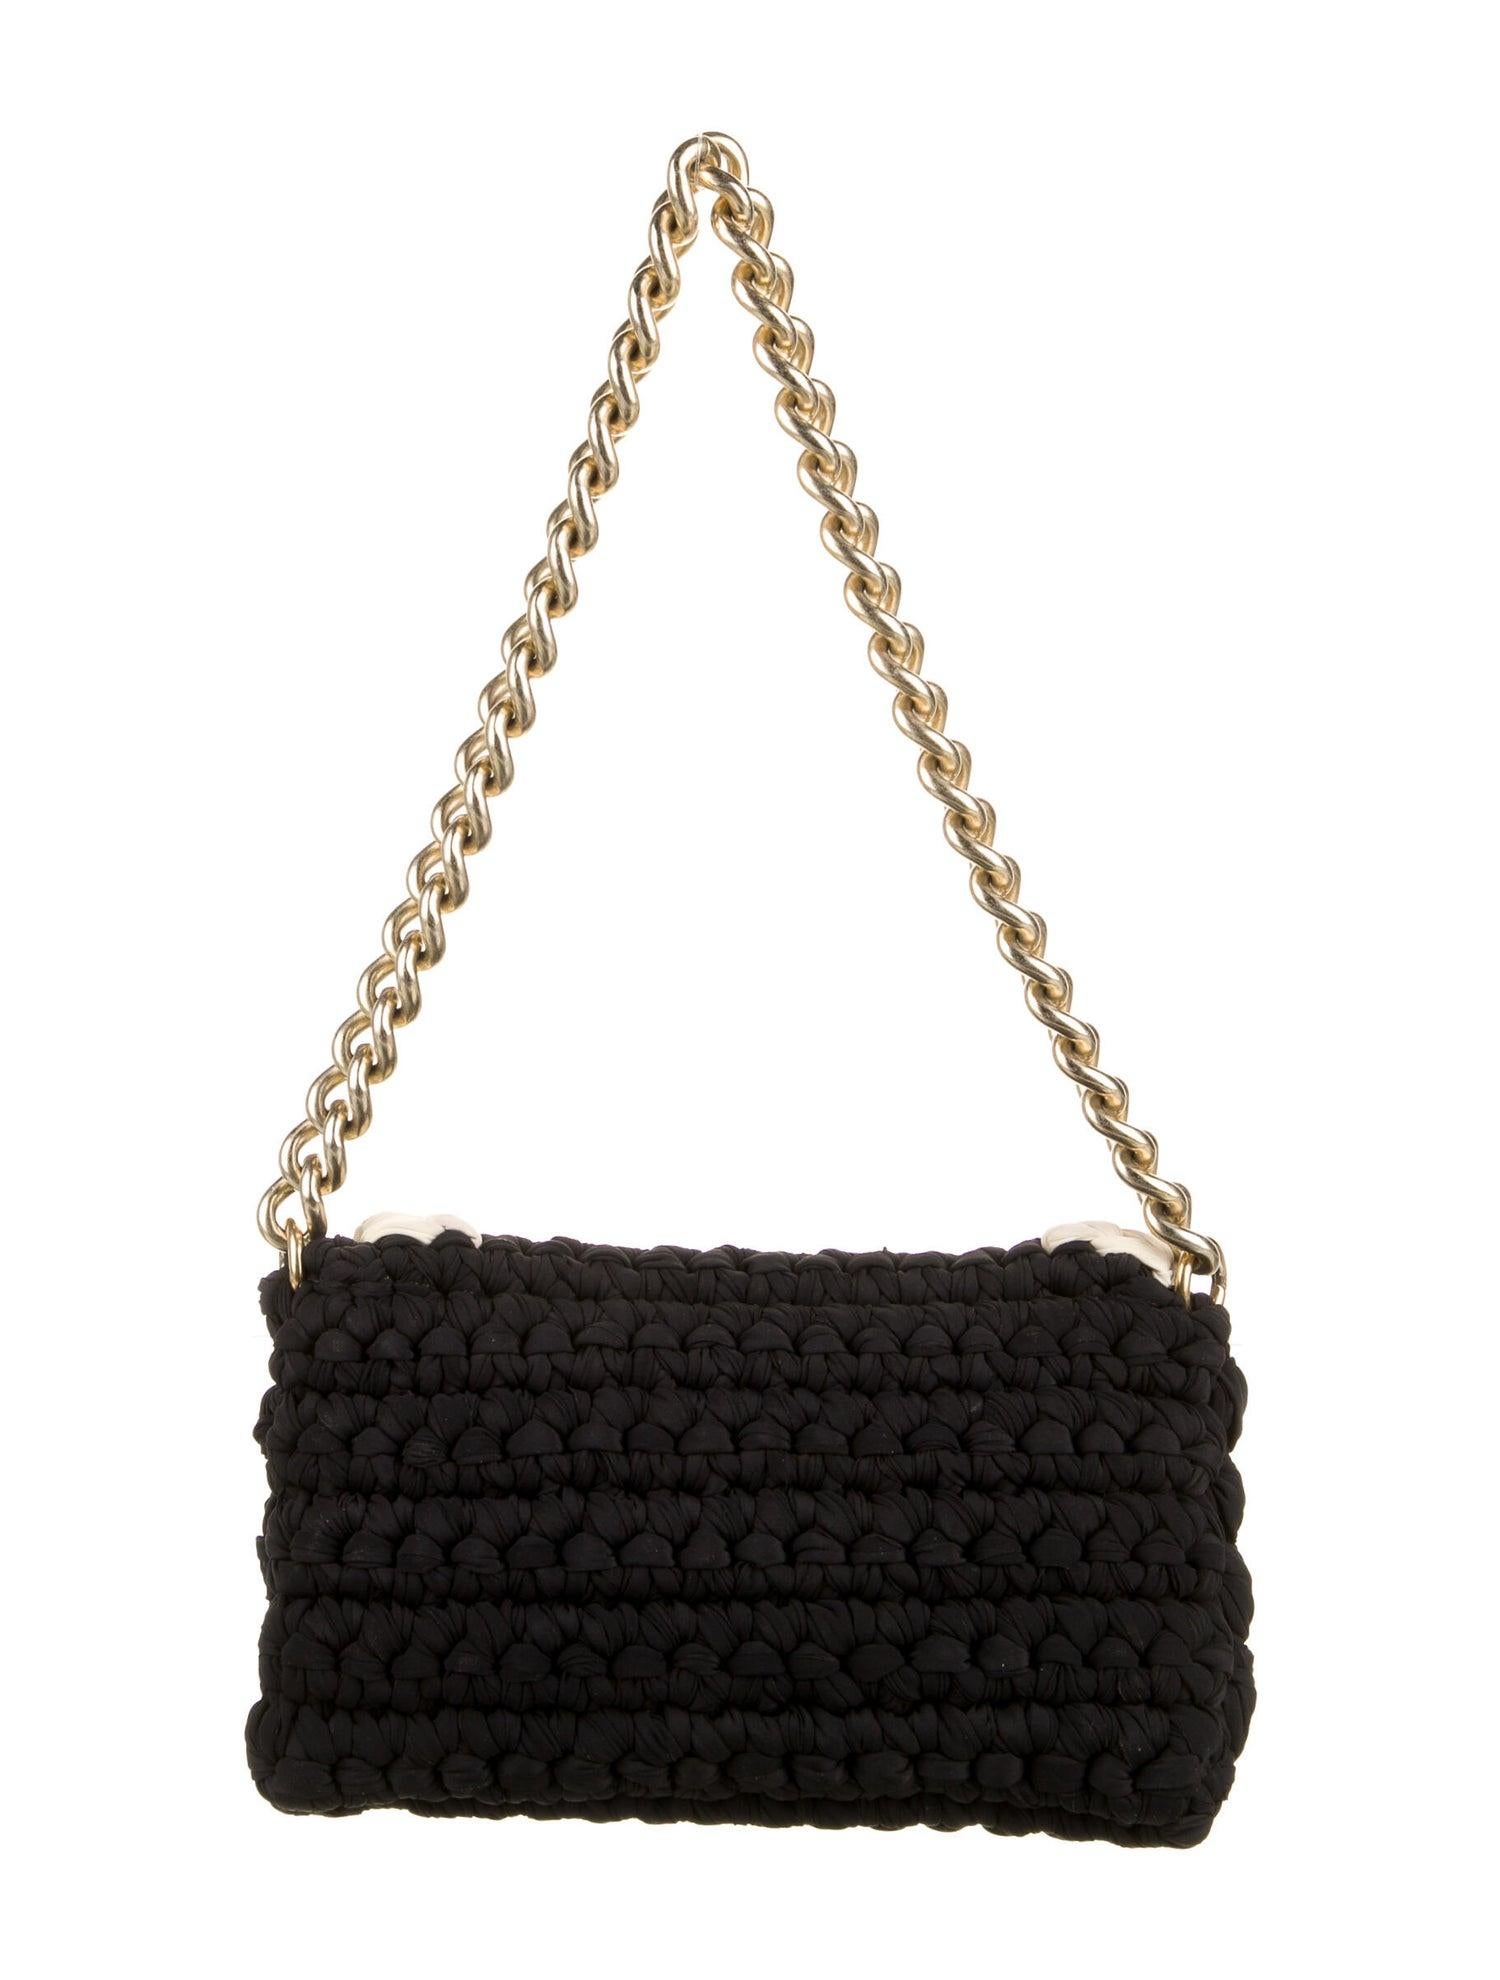 Chanel Interwoven Woven Crochet Bicolor Two Tone Medium Black & White Flap Bag For Sale 5